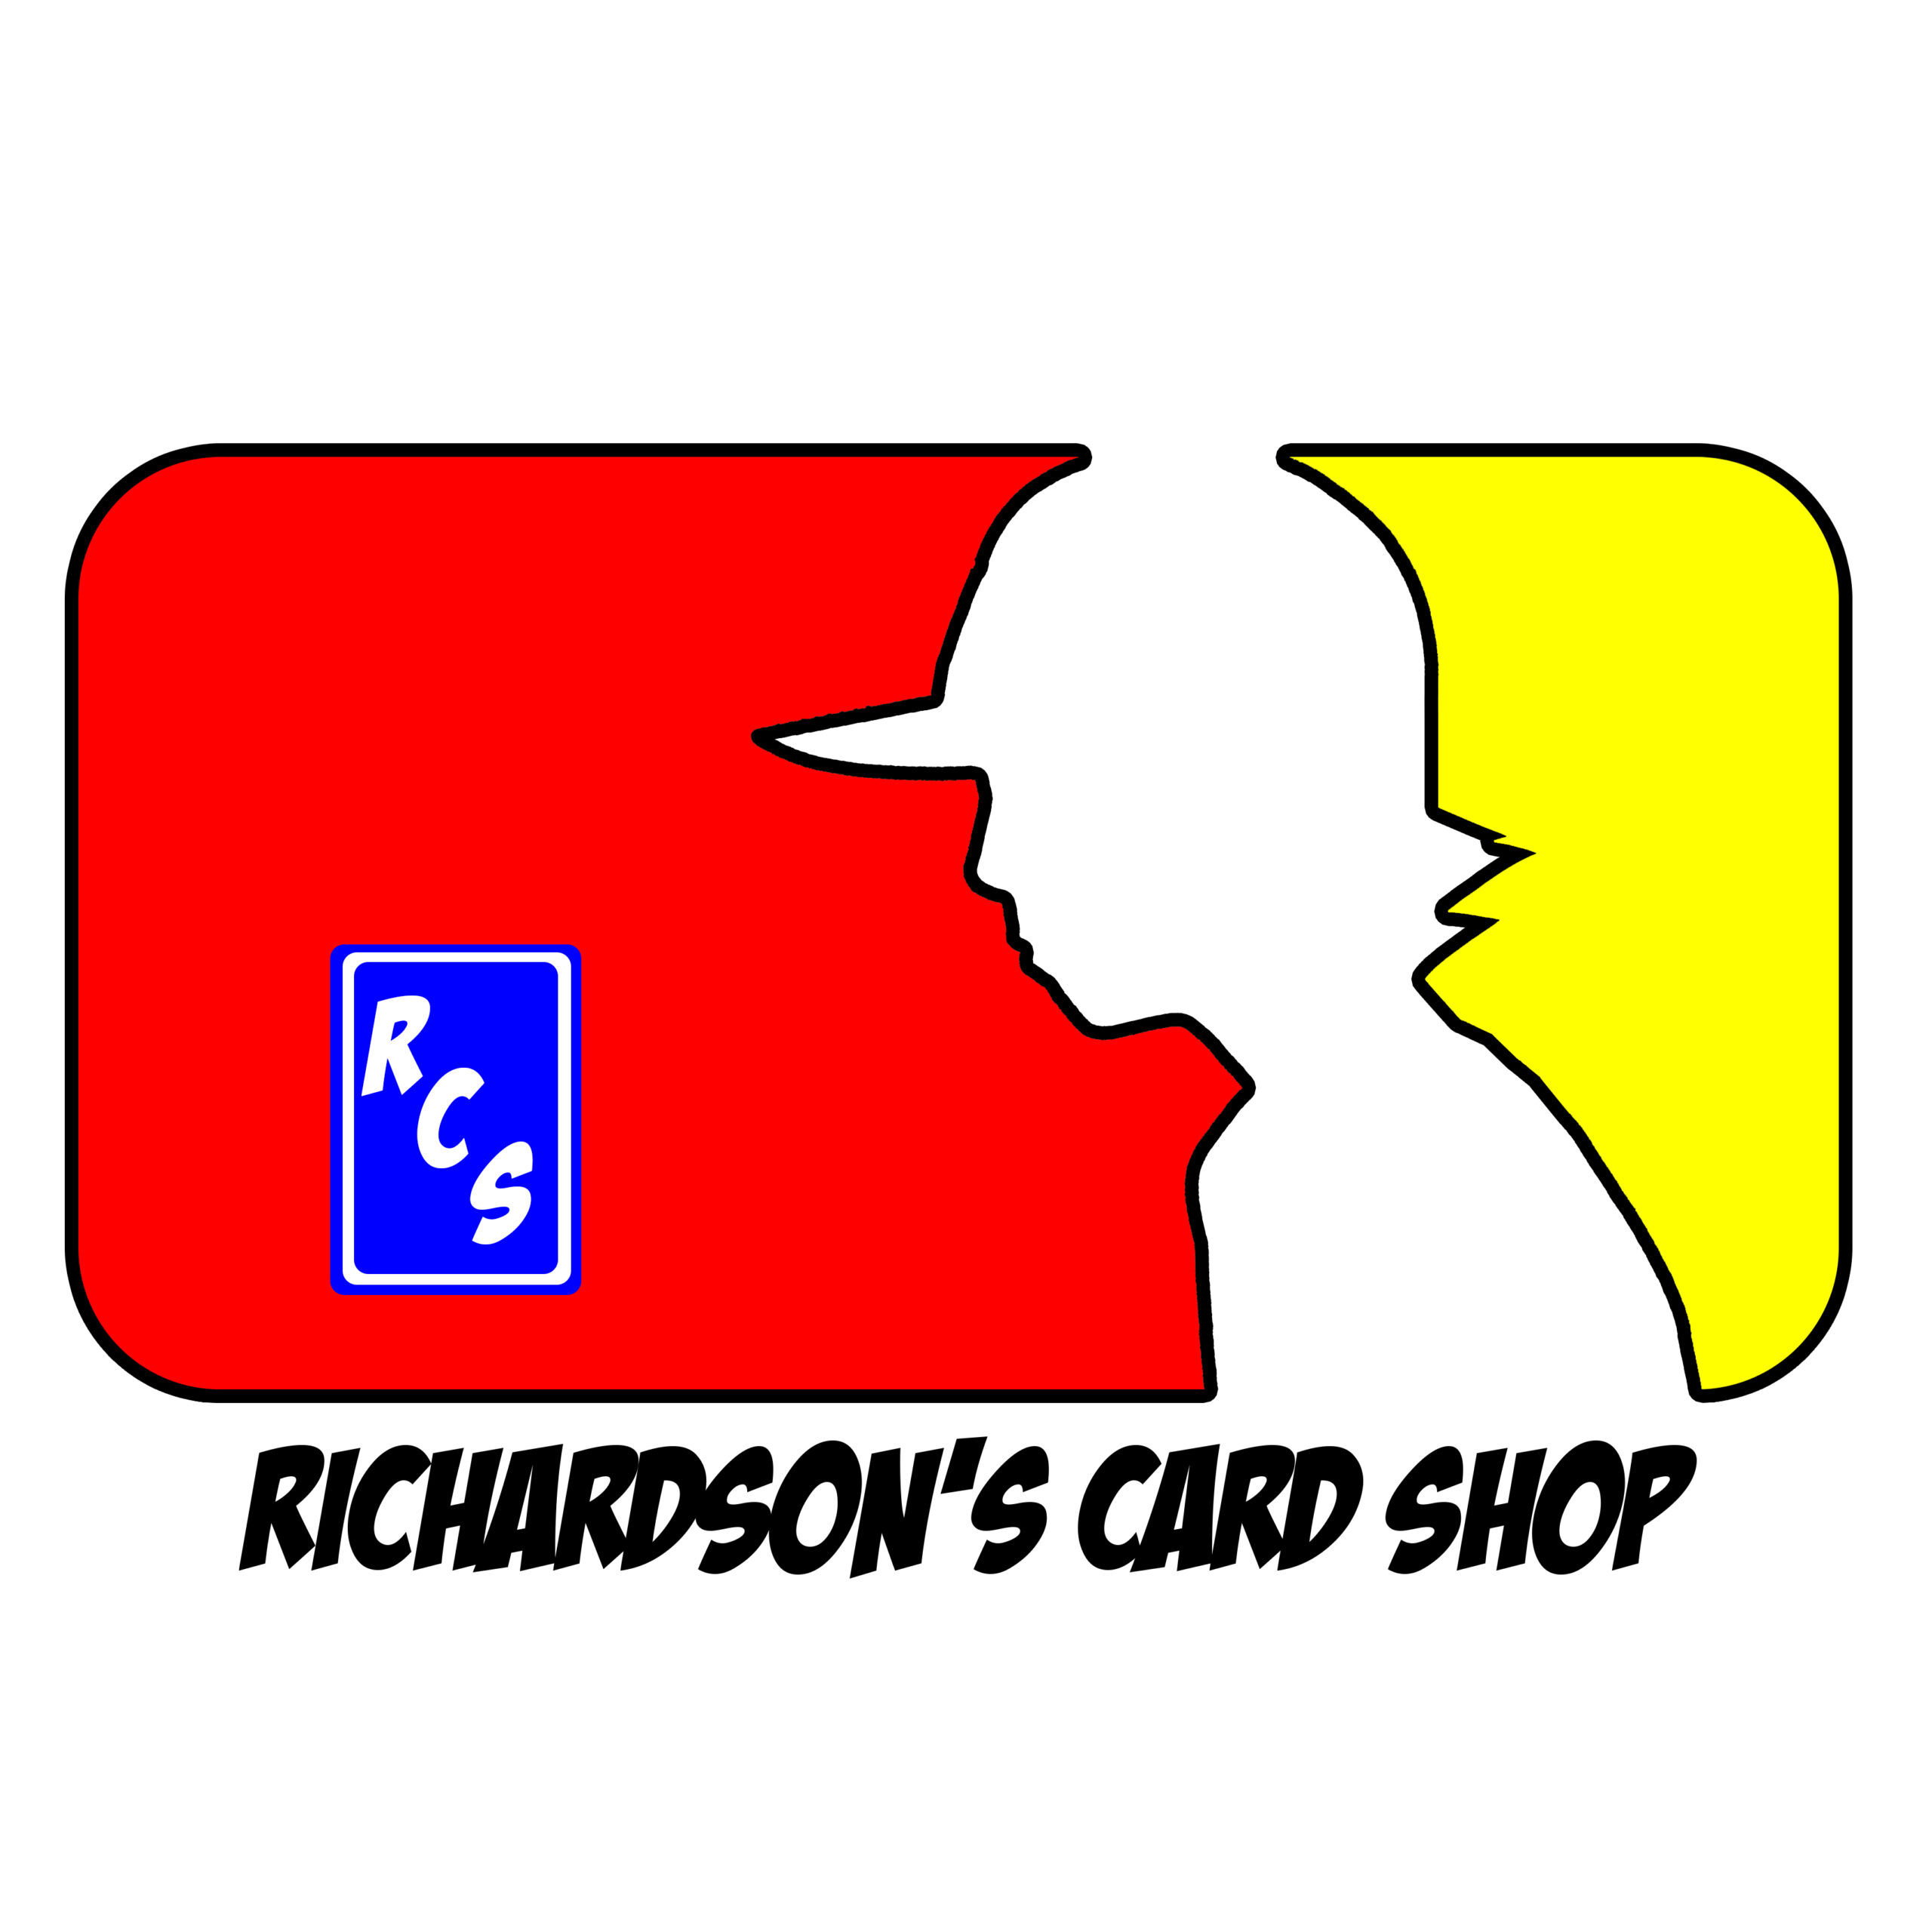 Richardsons card shop logo